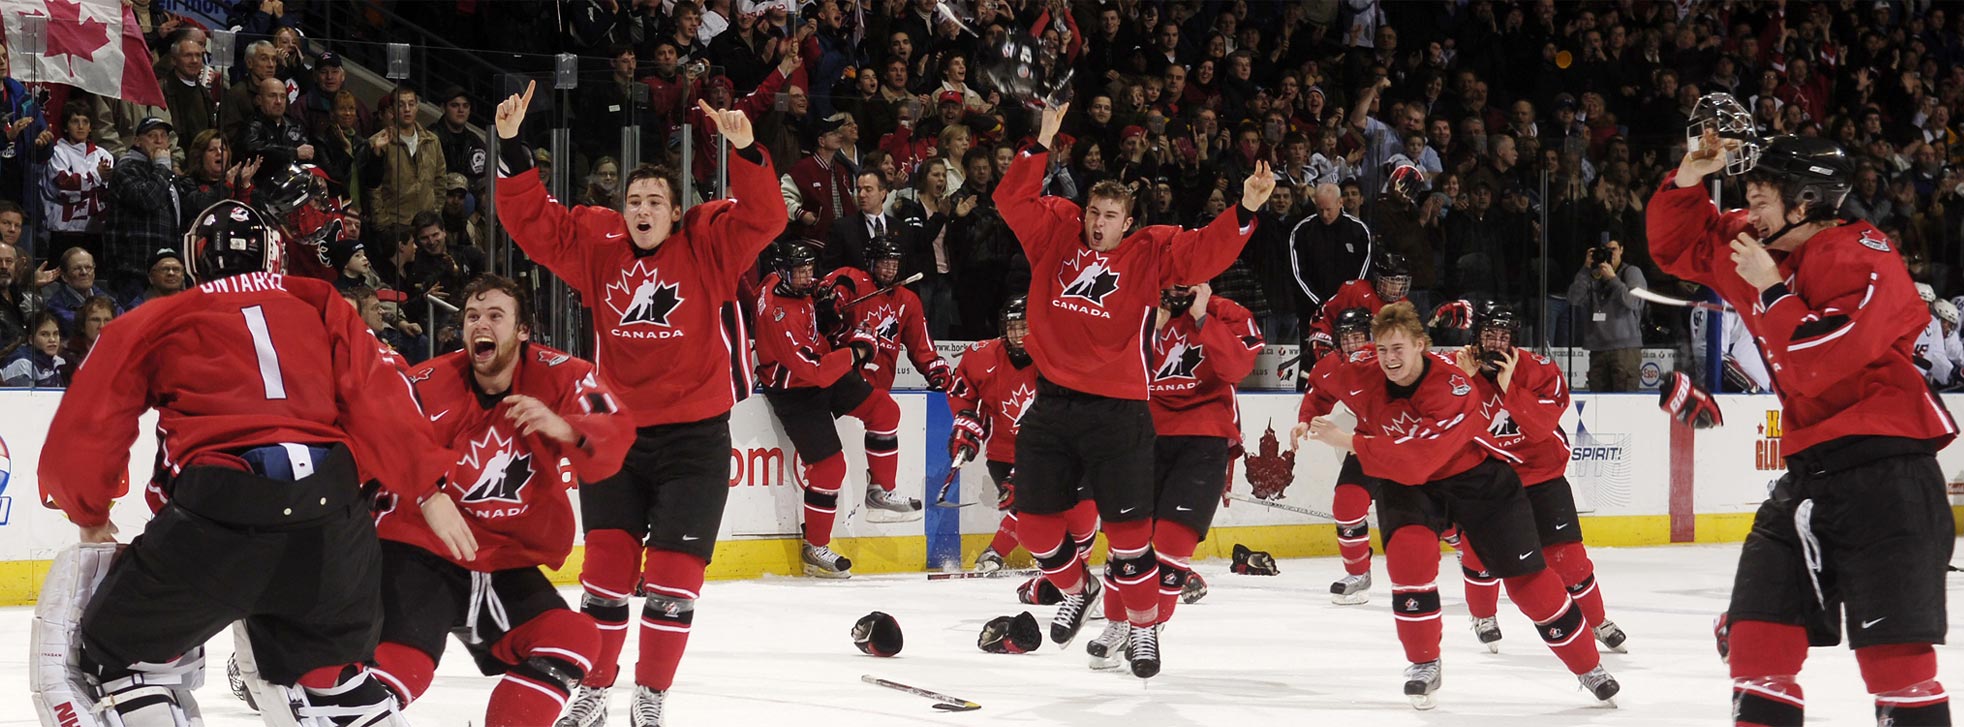 Team Canada Junior Hockey celebrating